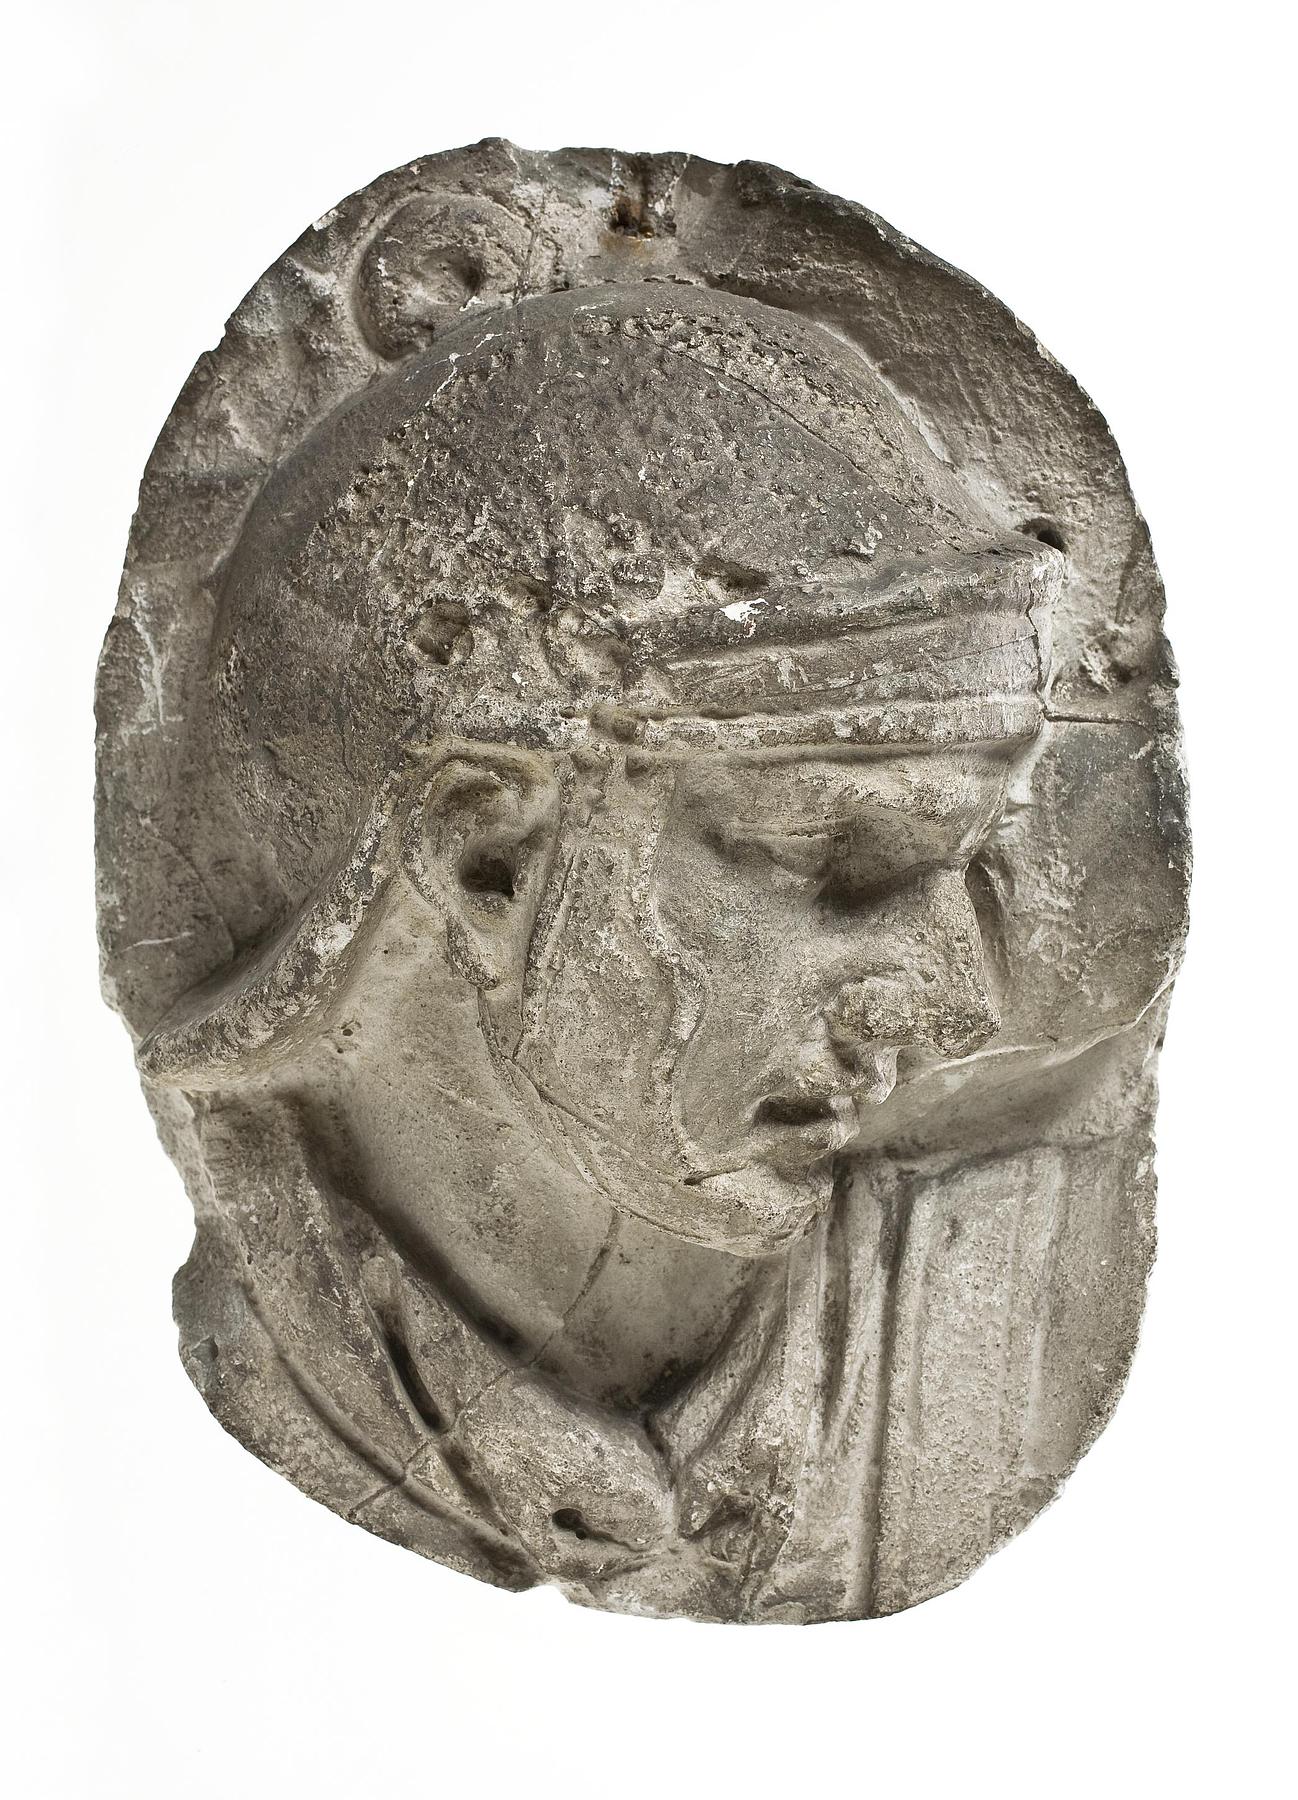 Head of a helmeted legionary, L326e